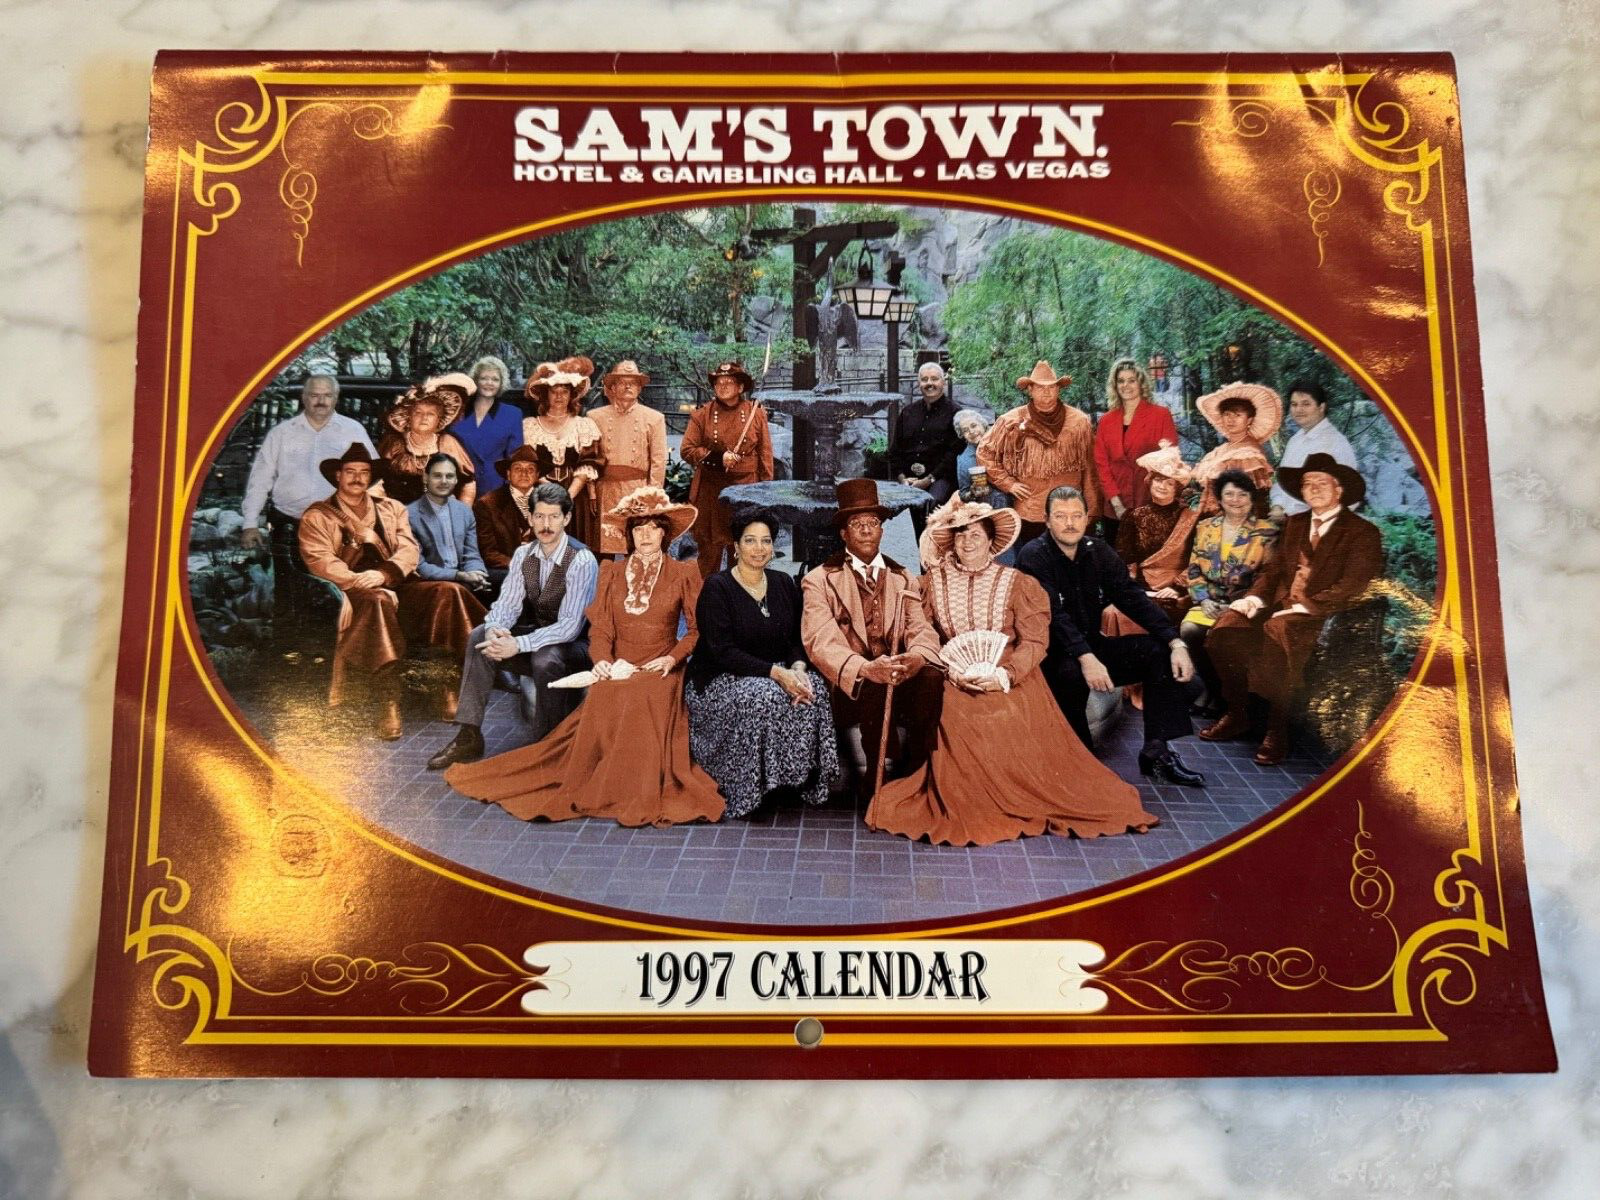 Sams Town Gold River Hotel Gambling Hall Casino Souvenir 1997 Calendar